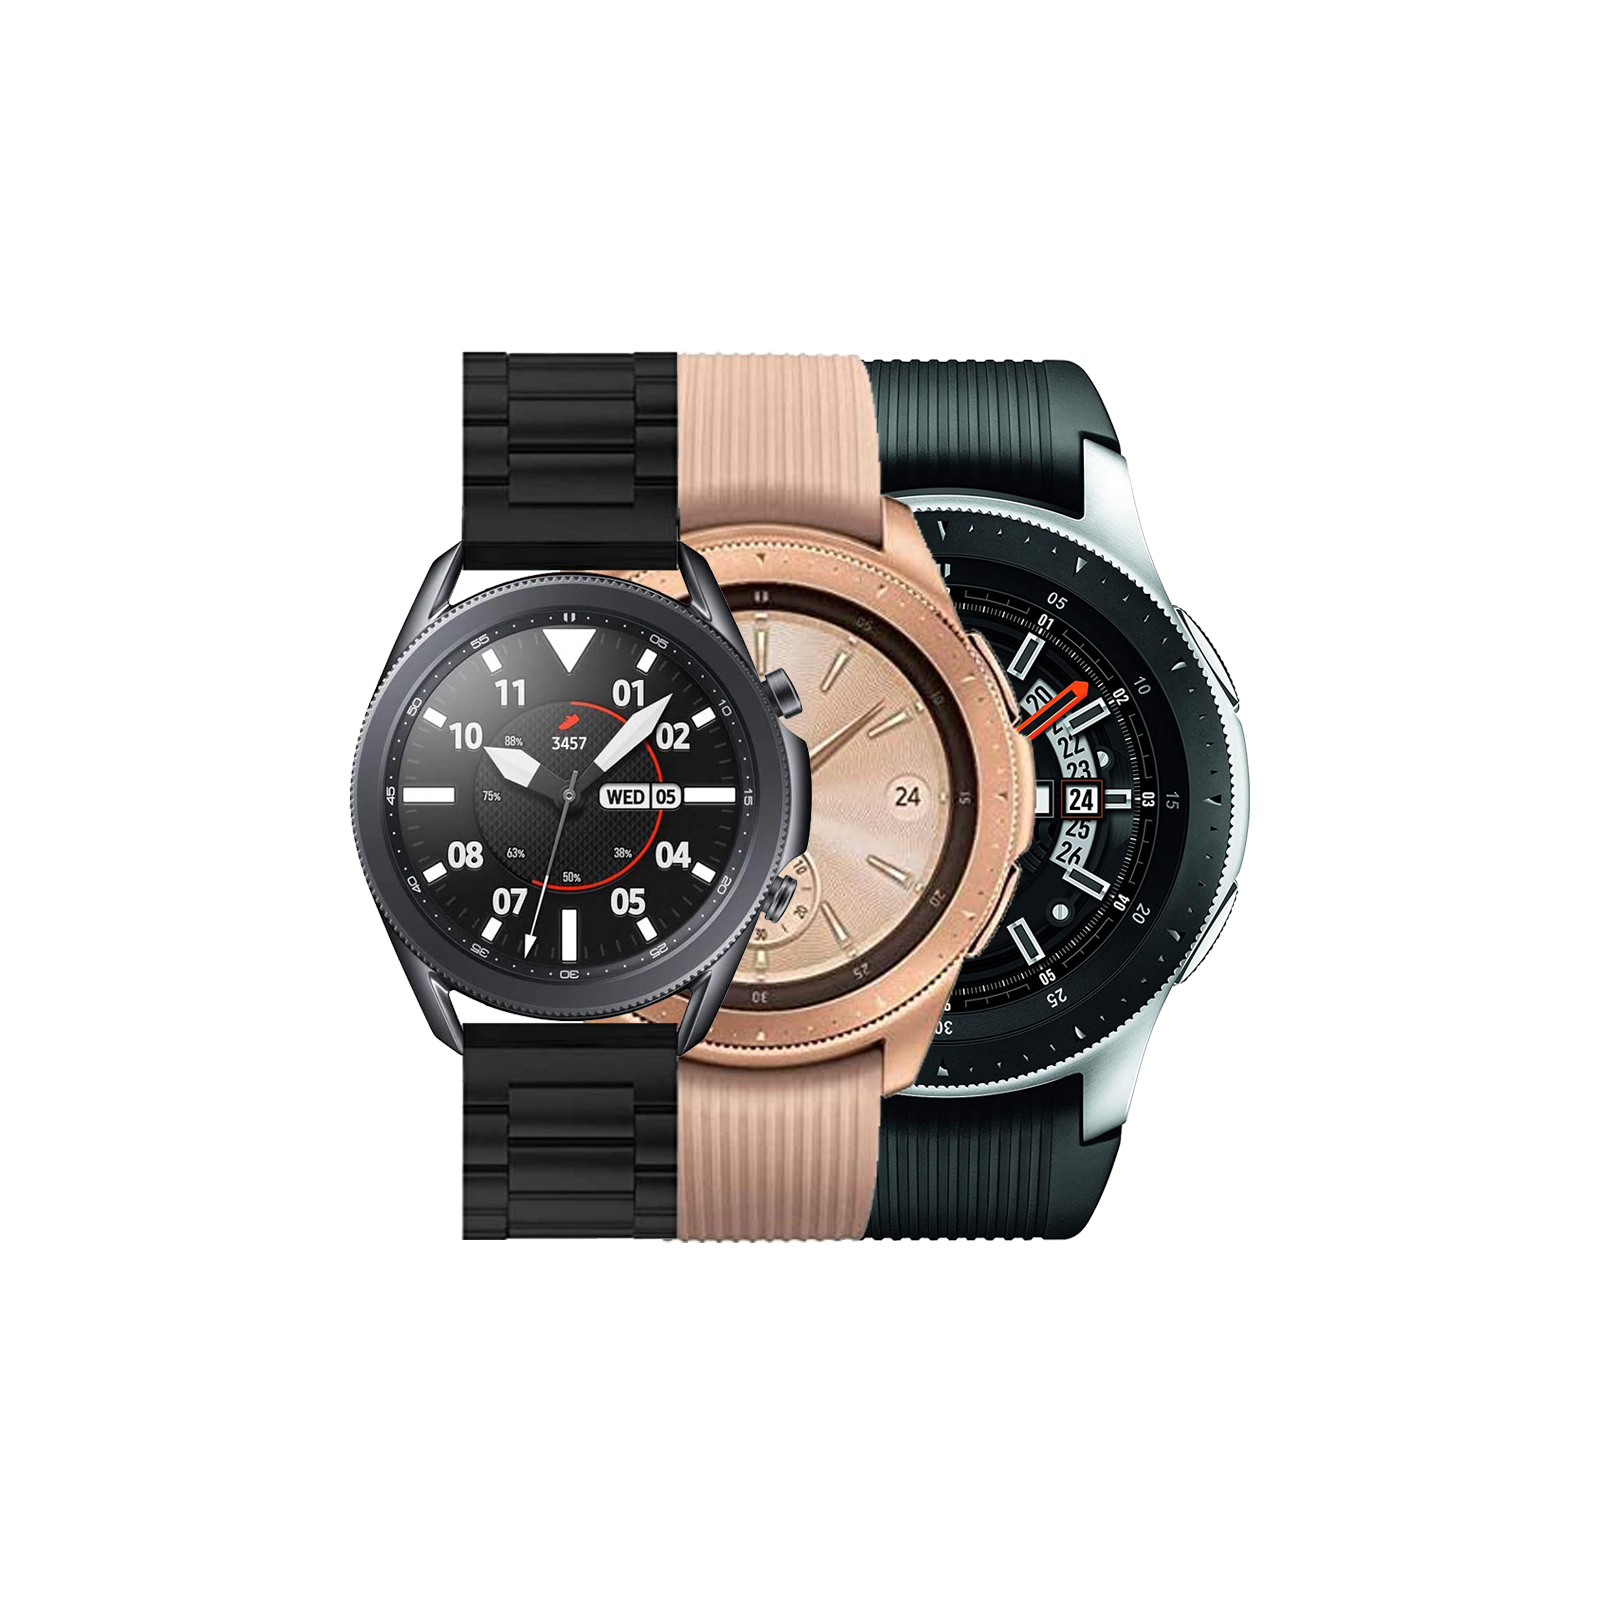 Samsung Galaxy Watch 4G 46mm - Very Good Condition